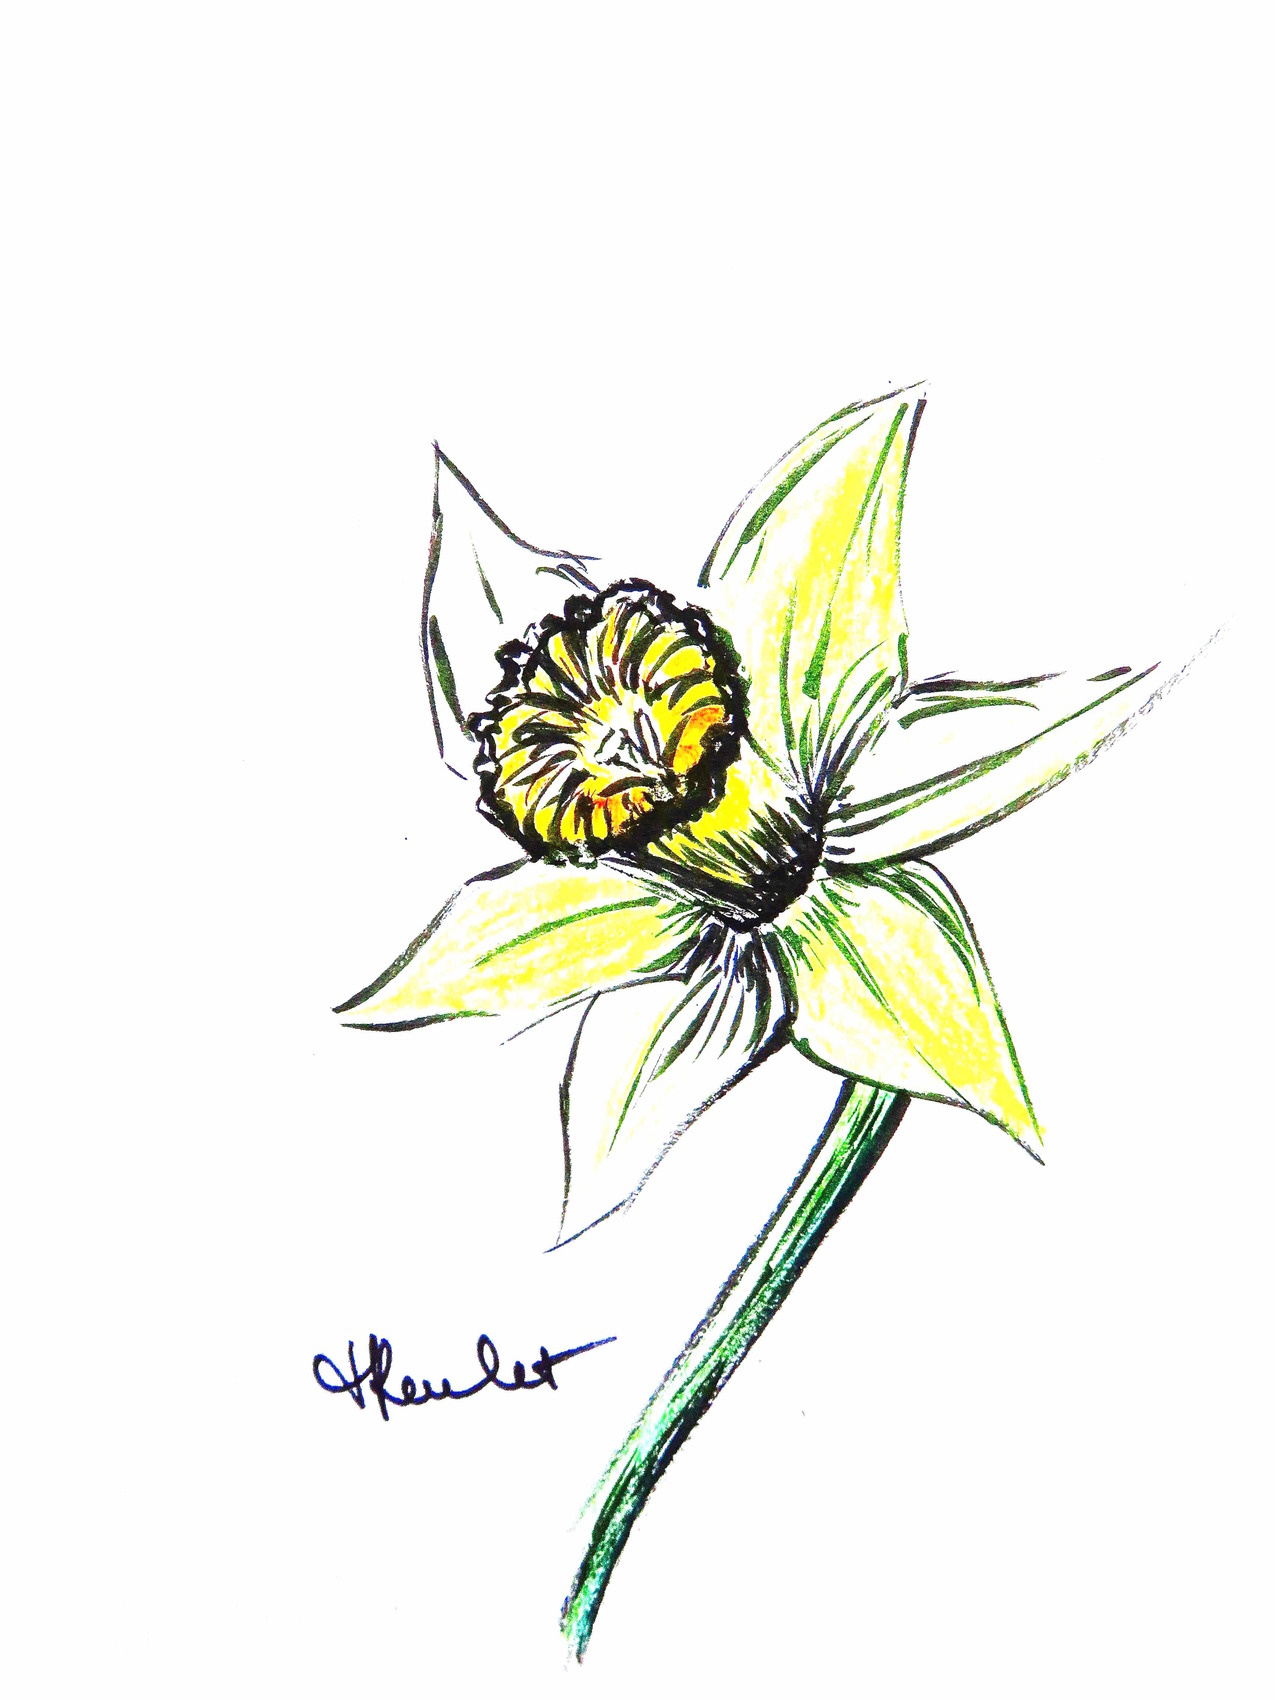 Dessin Une jonquille / Drawing : a daffodil (Narcissus jonquilla)